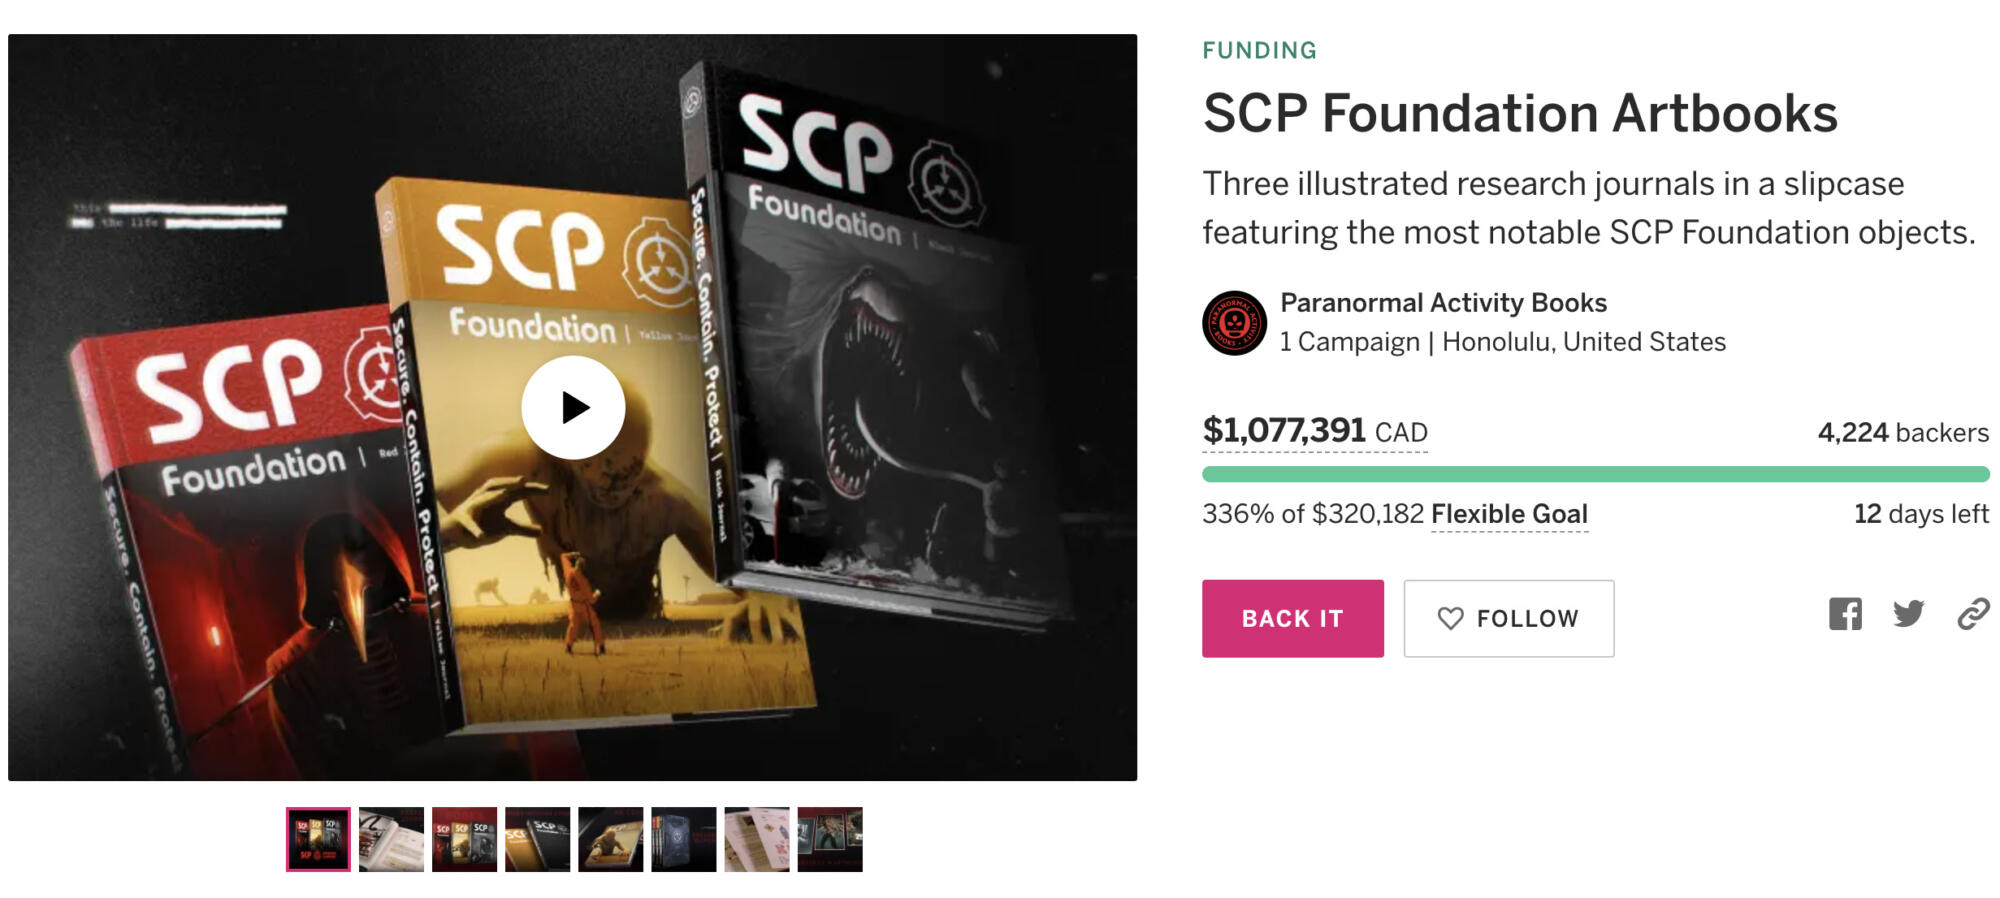 SCP Foundation Artbooks Launch Indiegogo Campaign - Comix Asylum